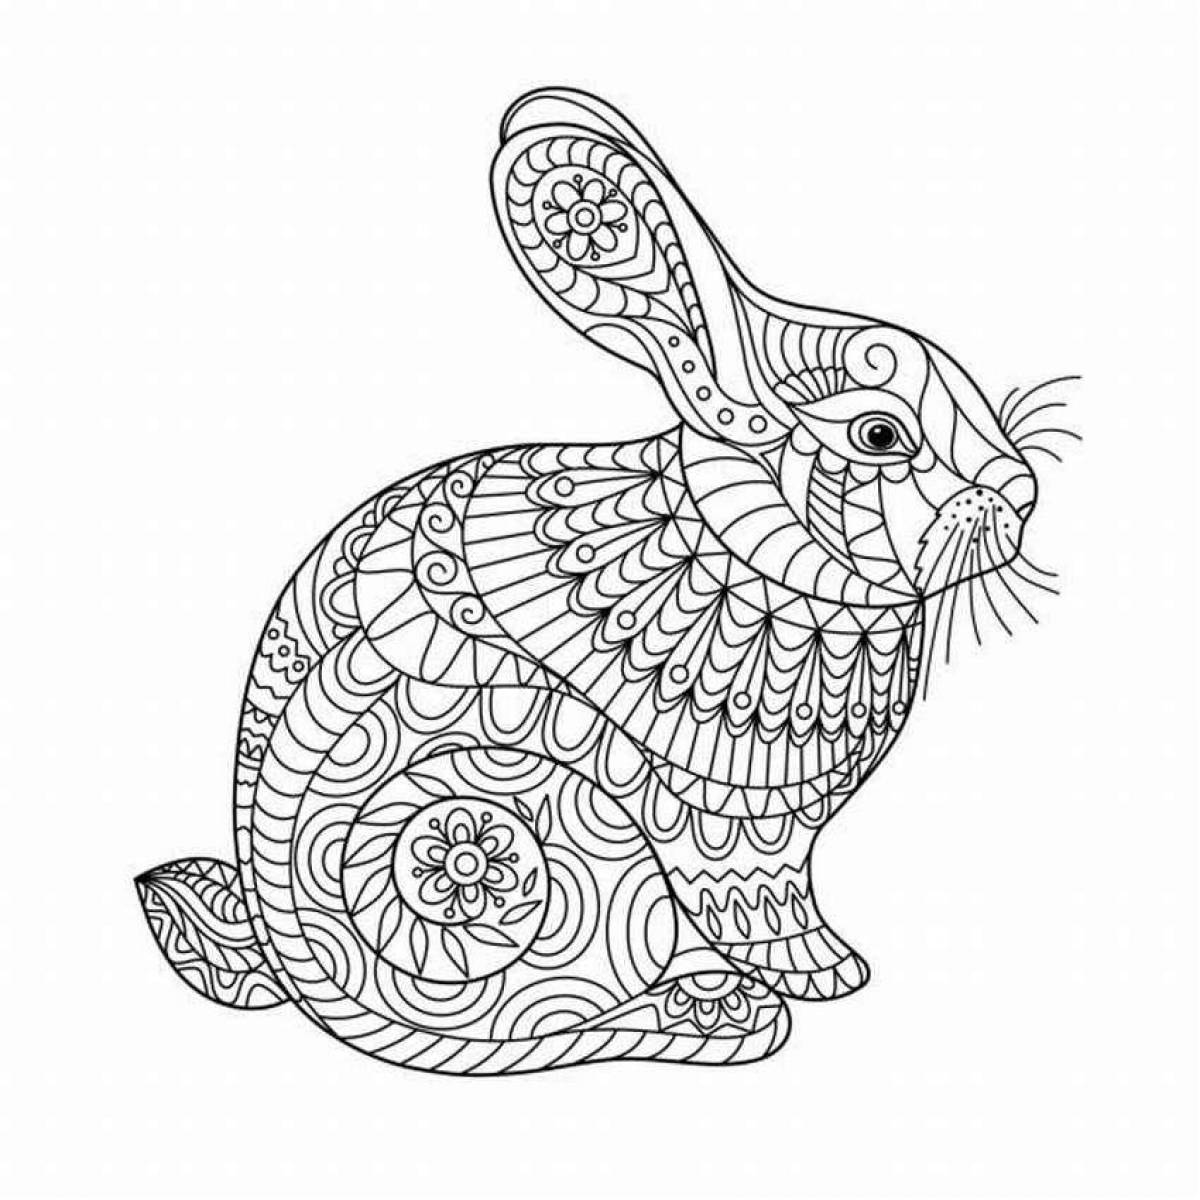 Coloring book calming anti-stress hare